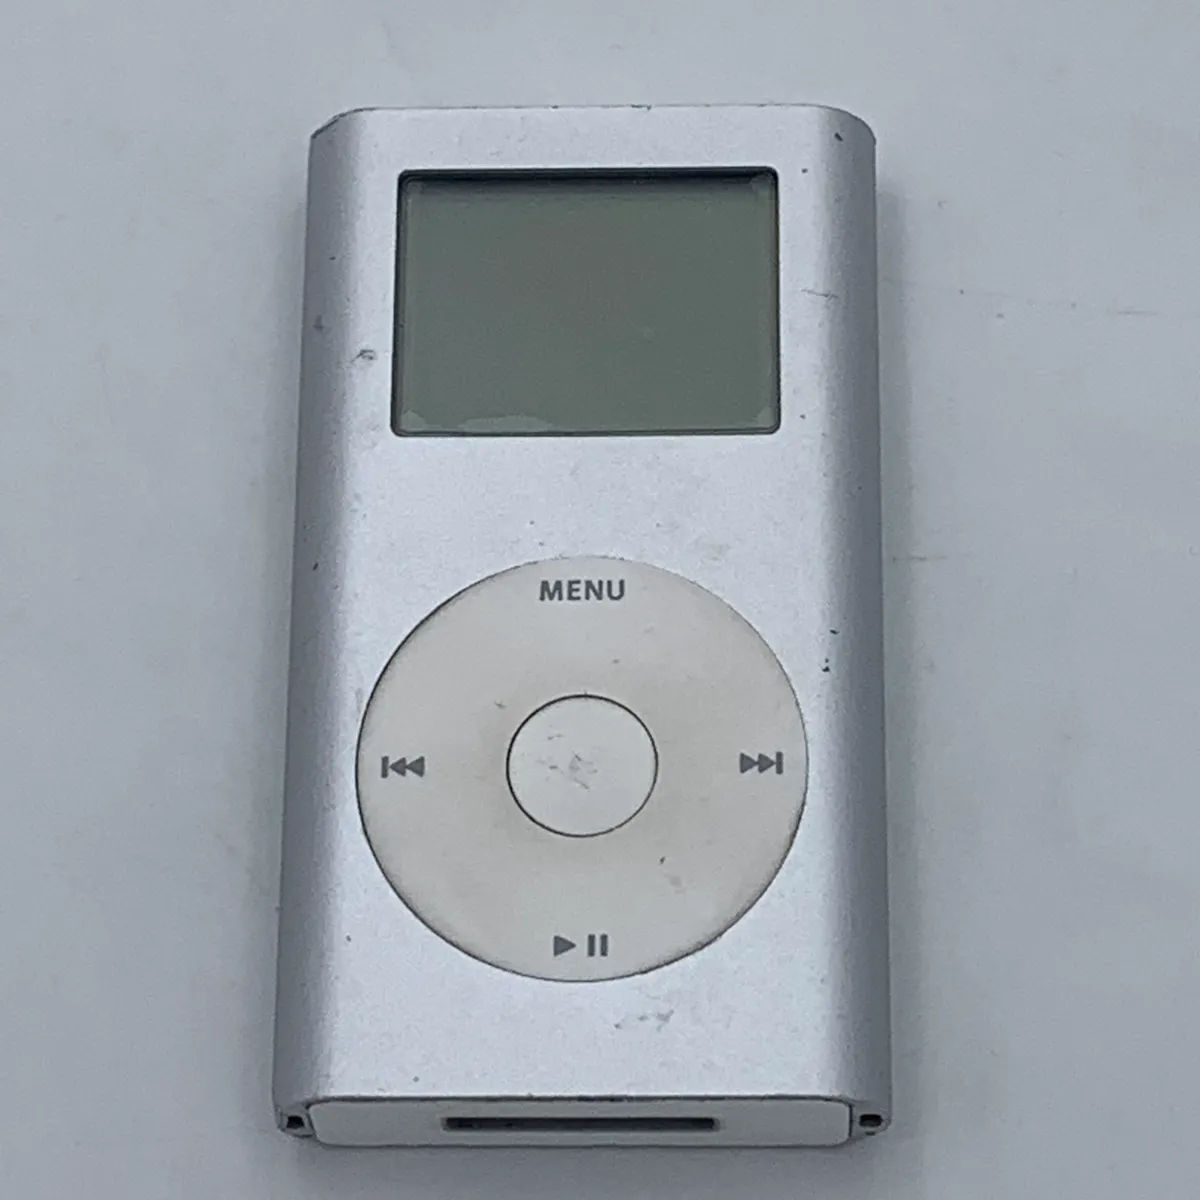 iPodmini